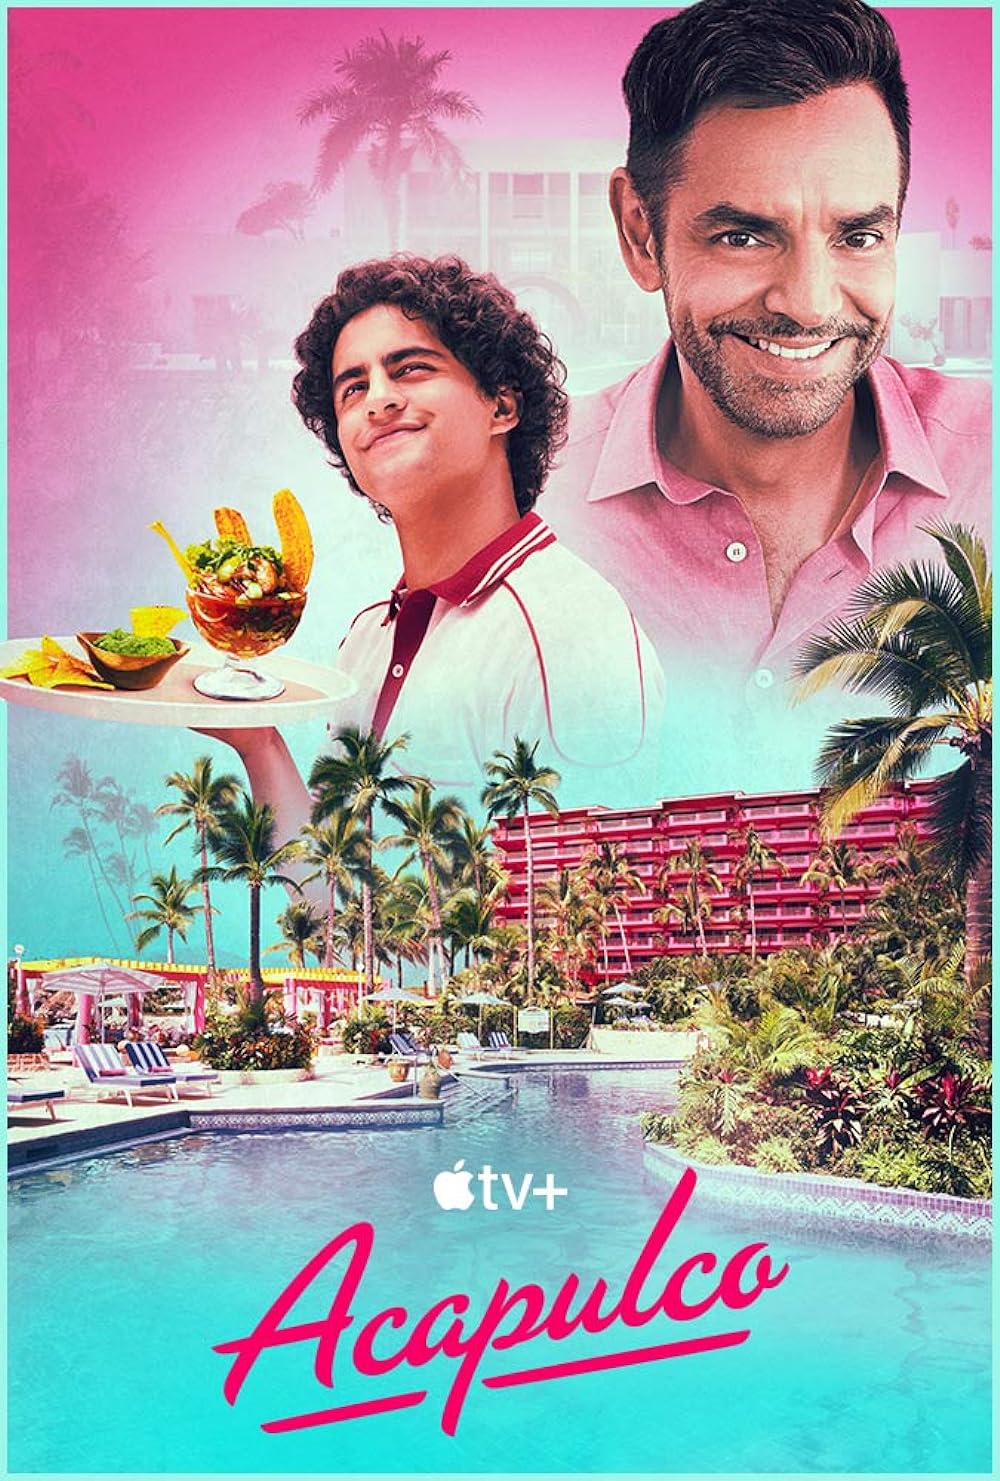 Acapulco season 3 (Streaming on Apple TV+) - May 1Join Maximo Gallardo in the third season of 